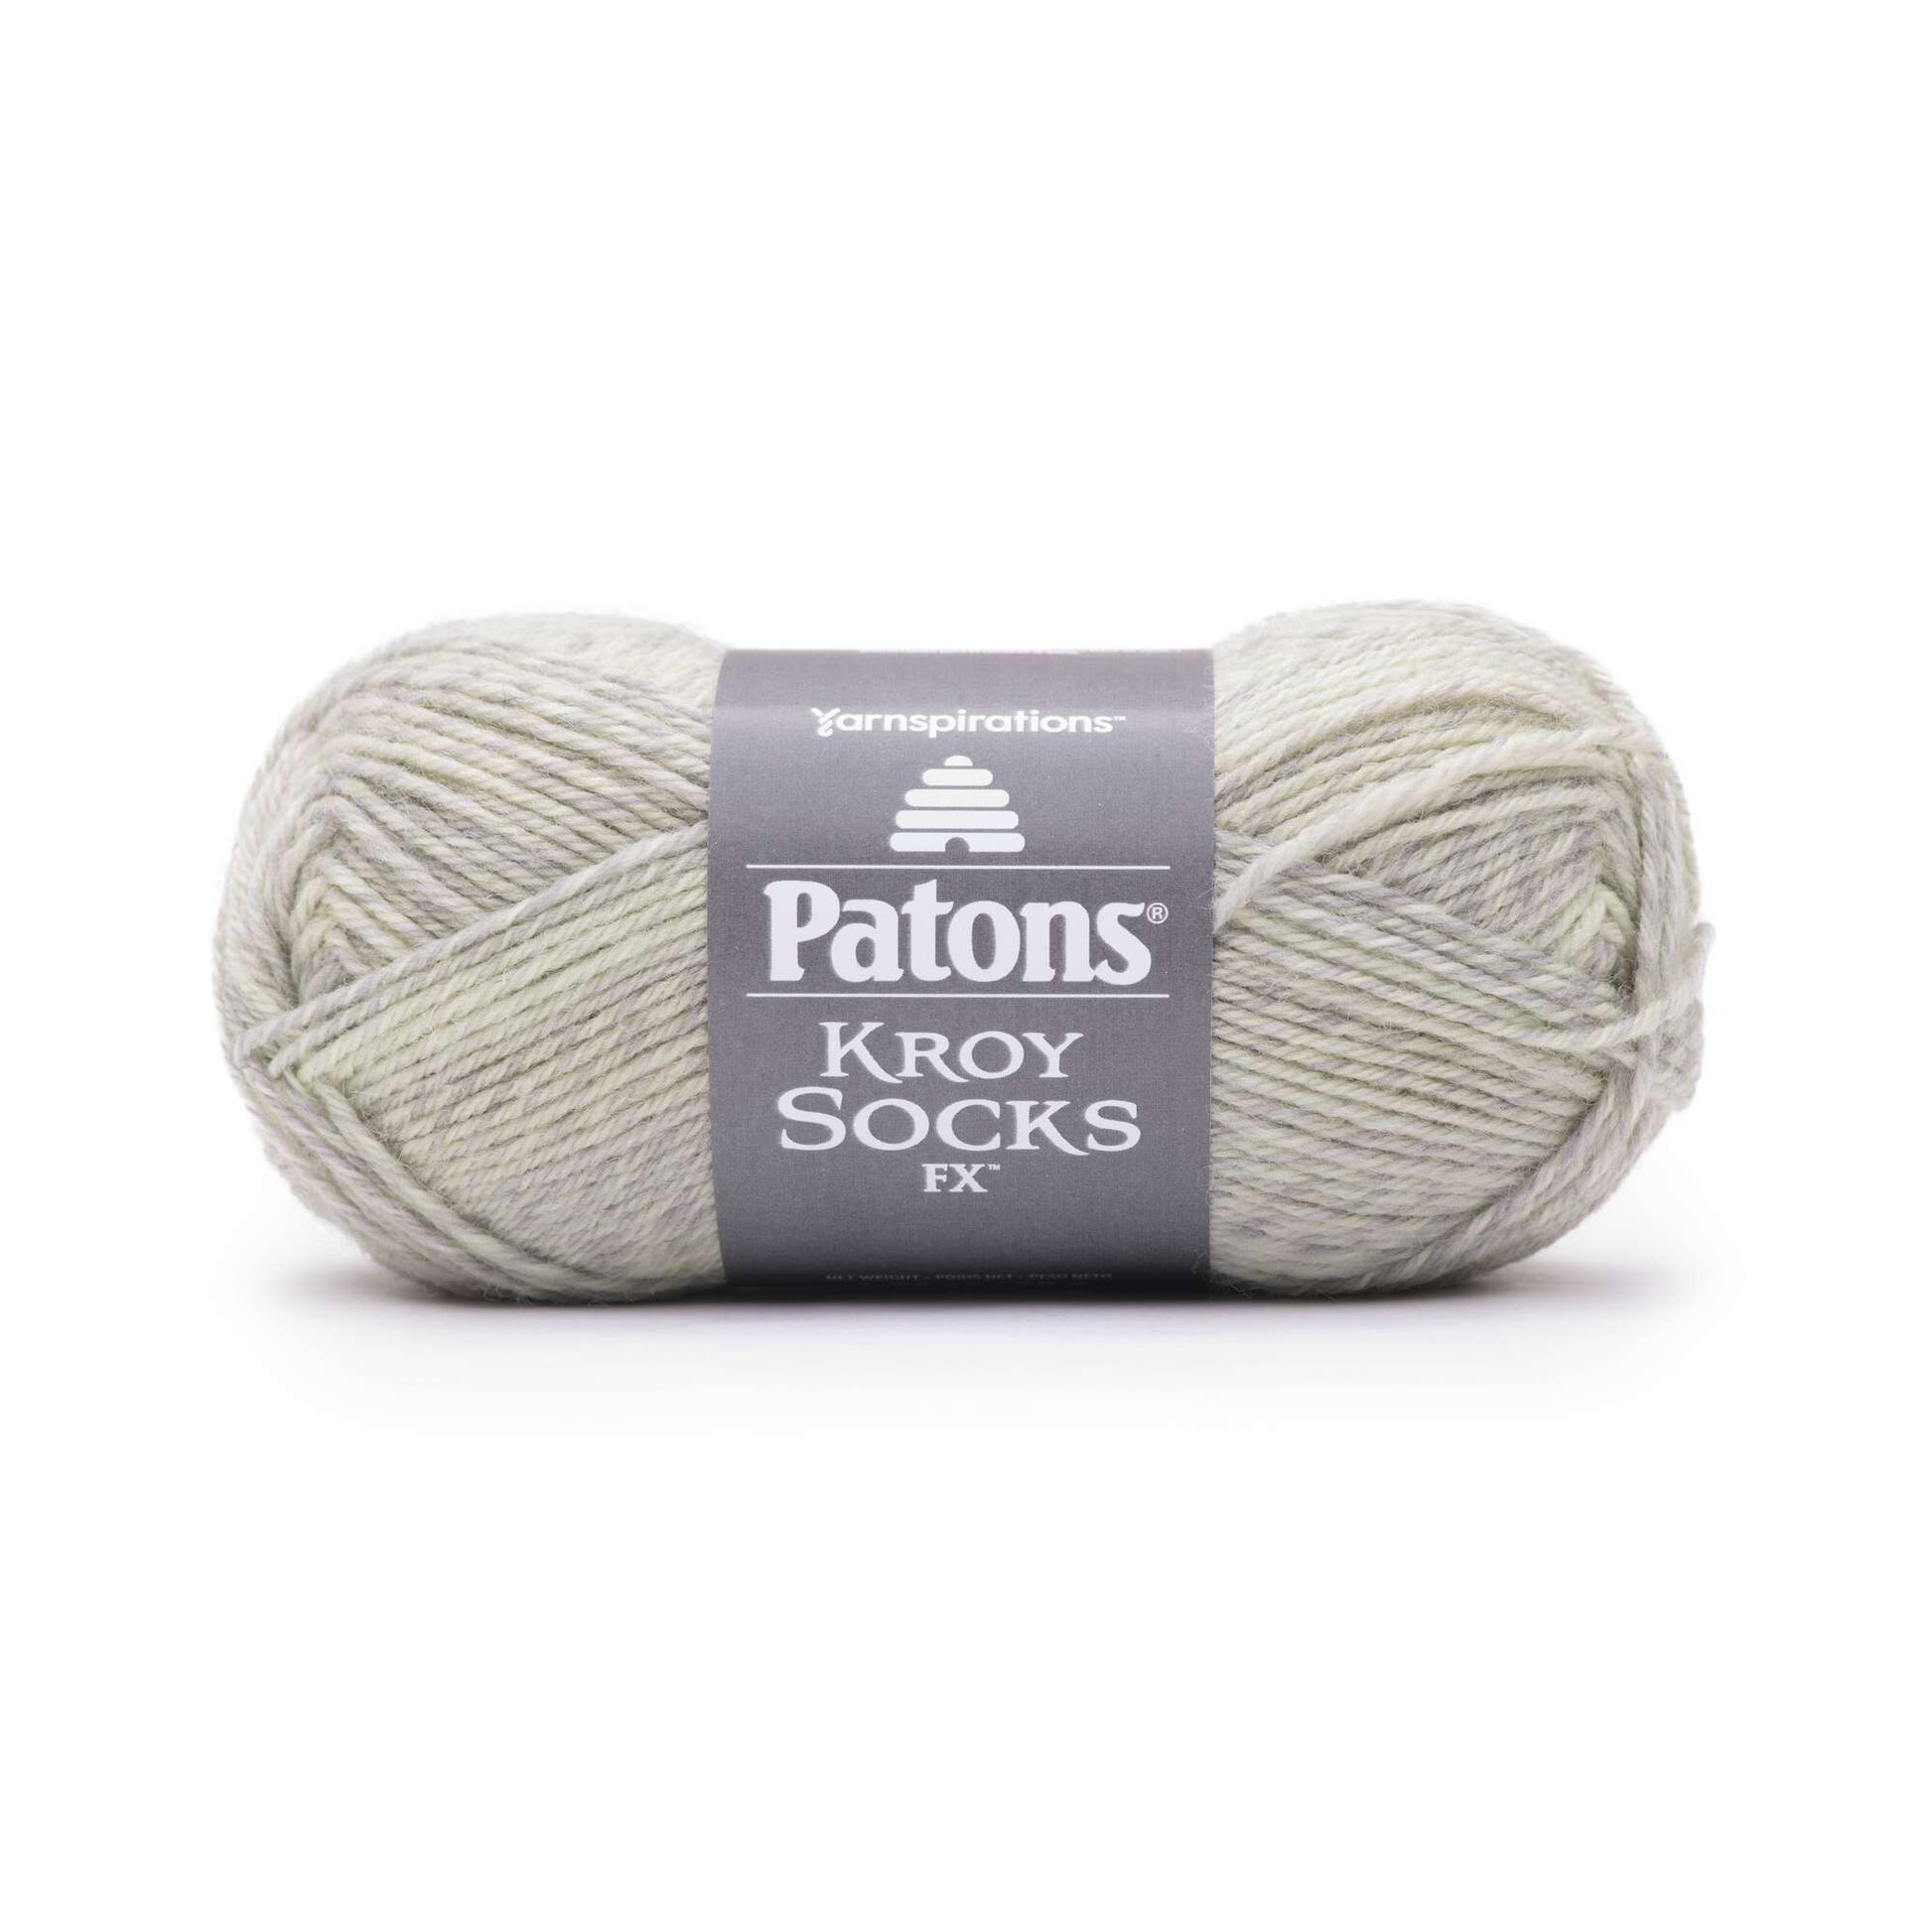 Patons Kroy Socks FX Yarn Seashell Colors